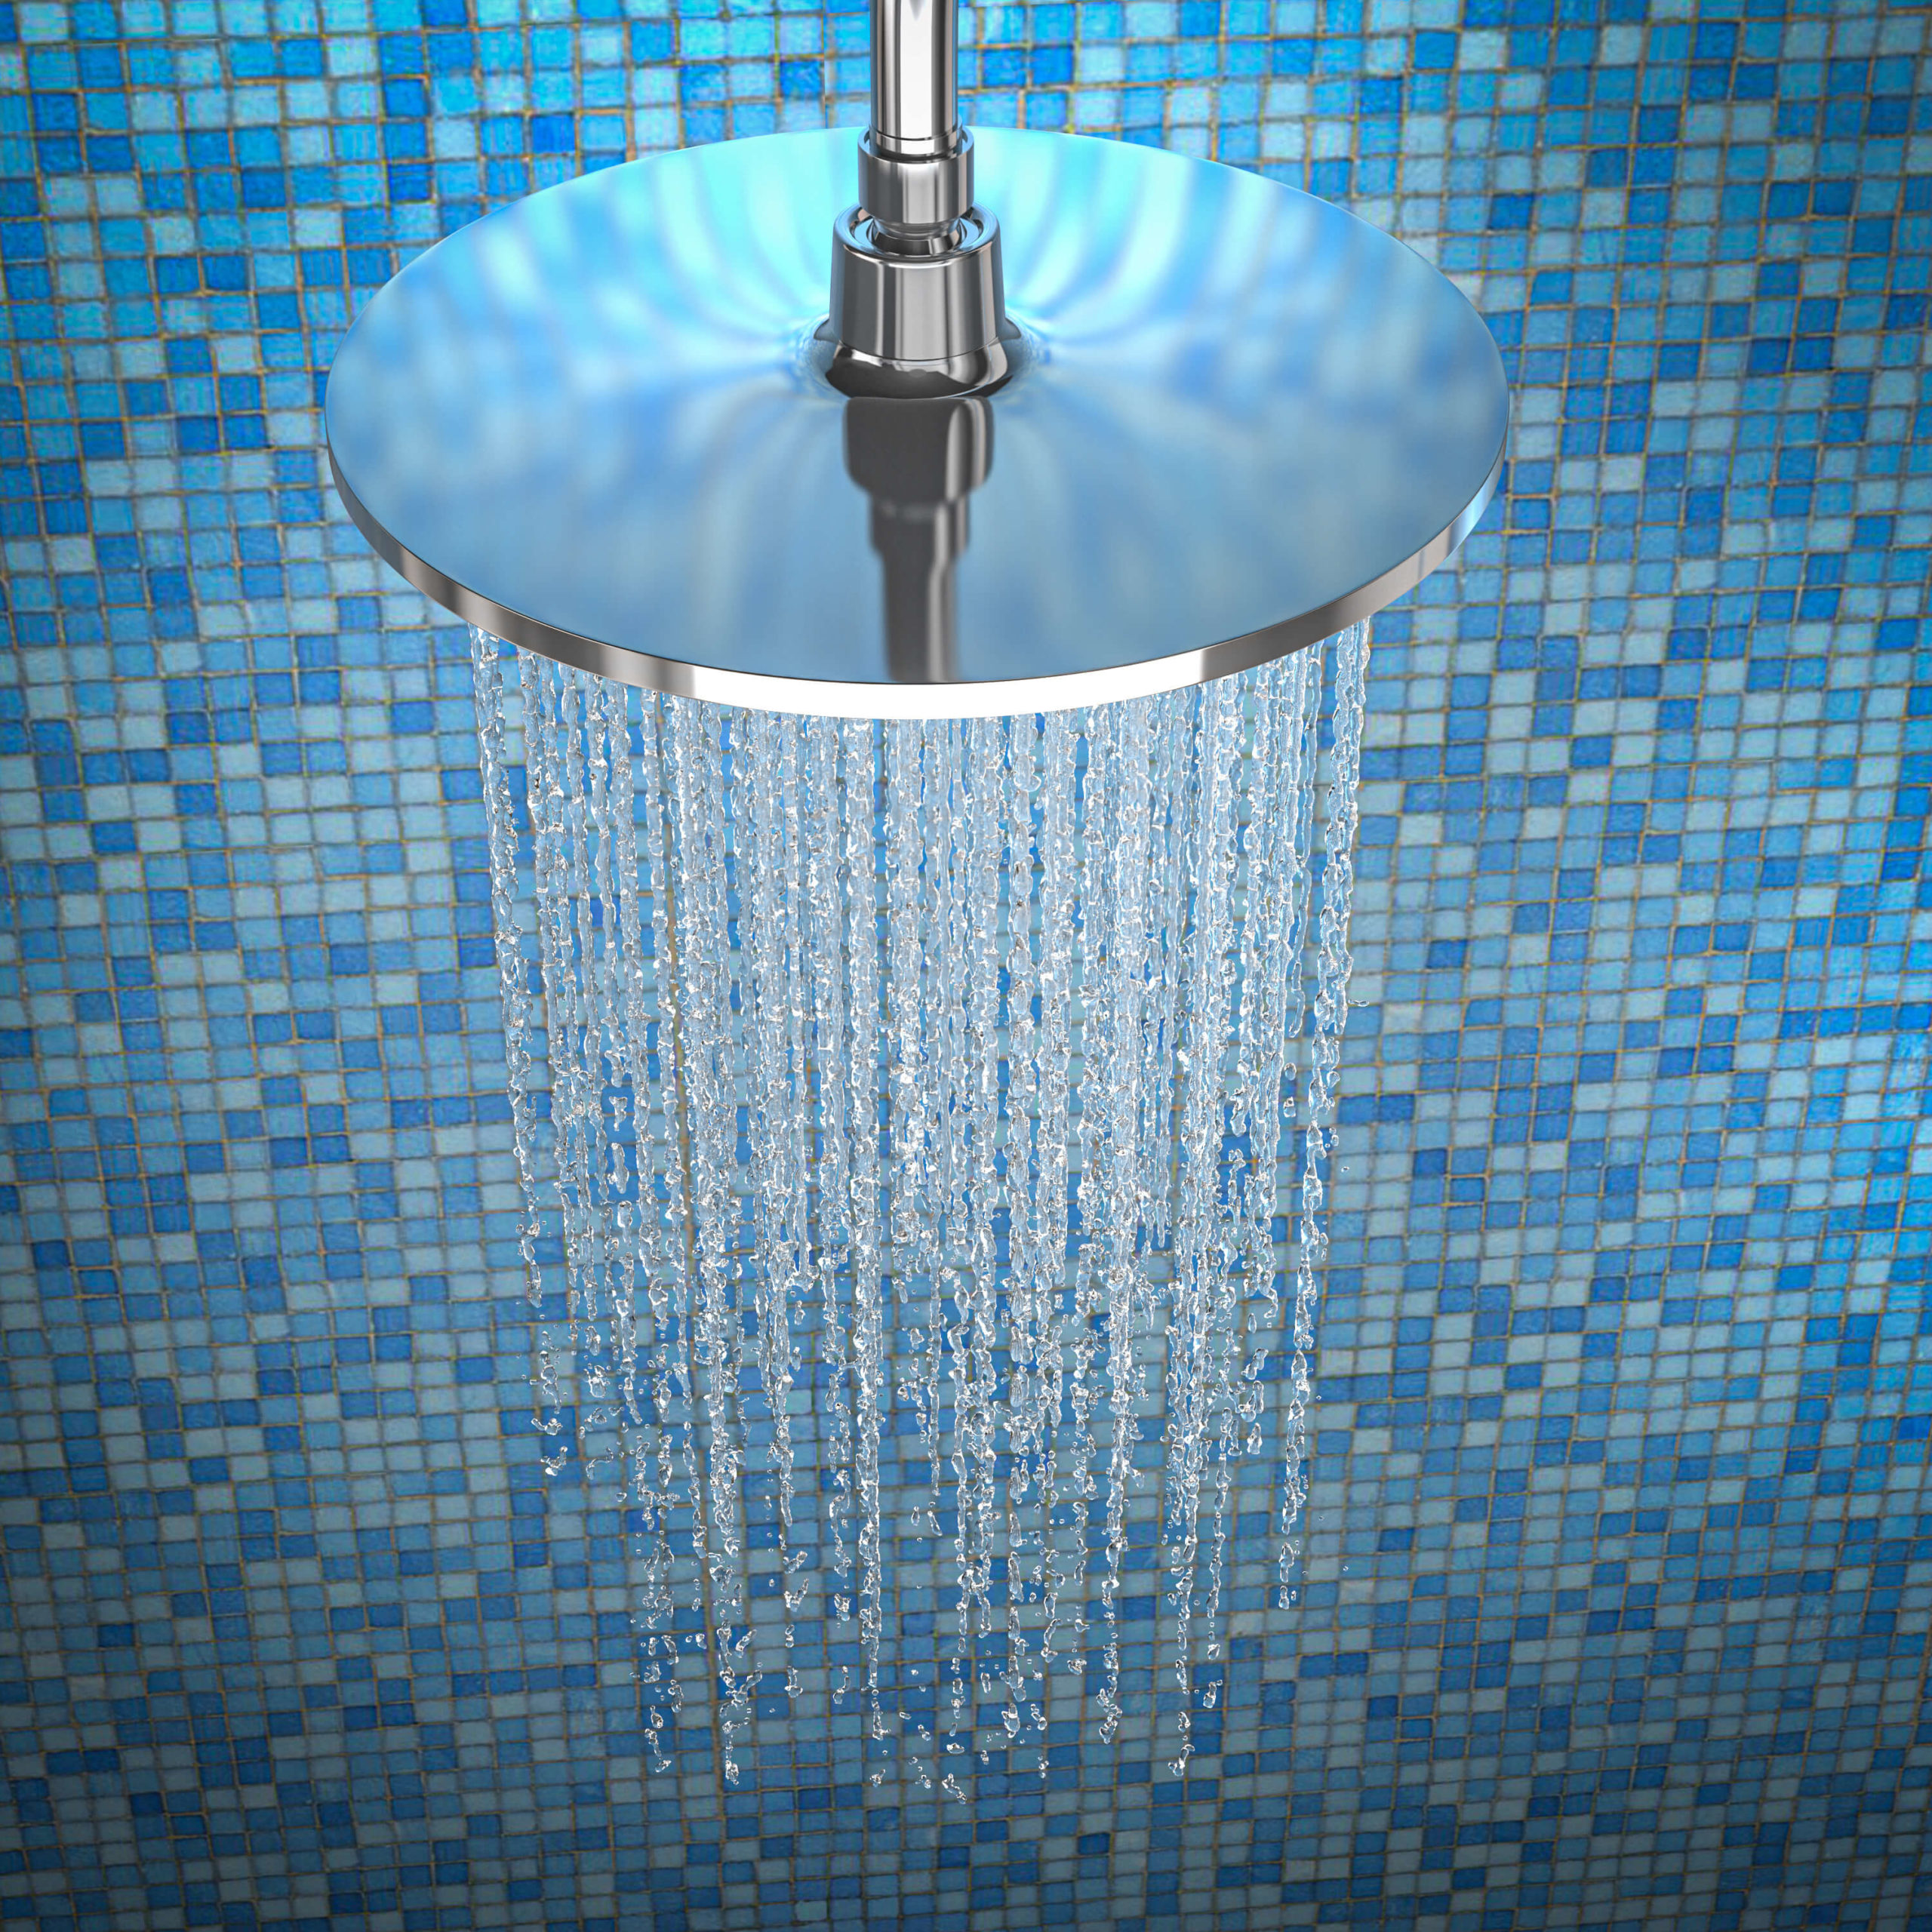 Ideas for Remodeling Your Bathroom - Aqua Blue tiles